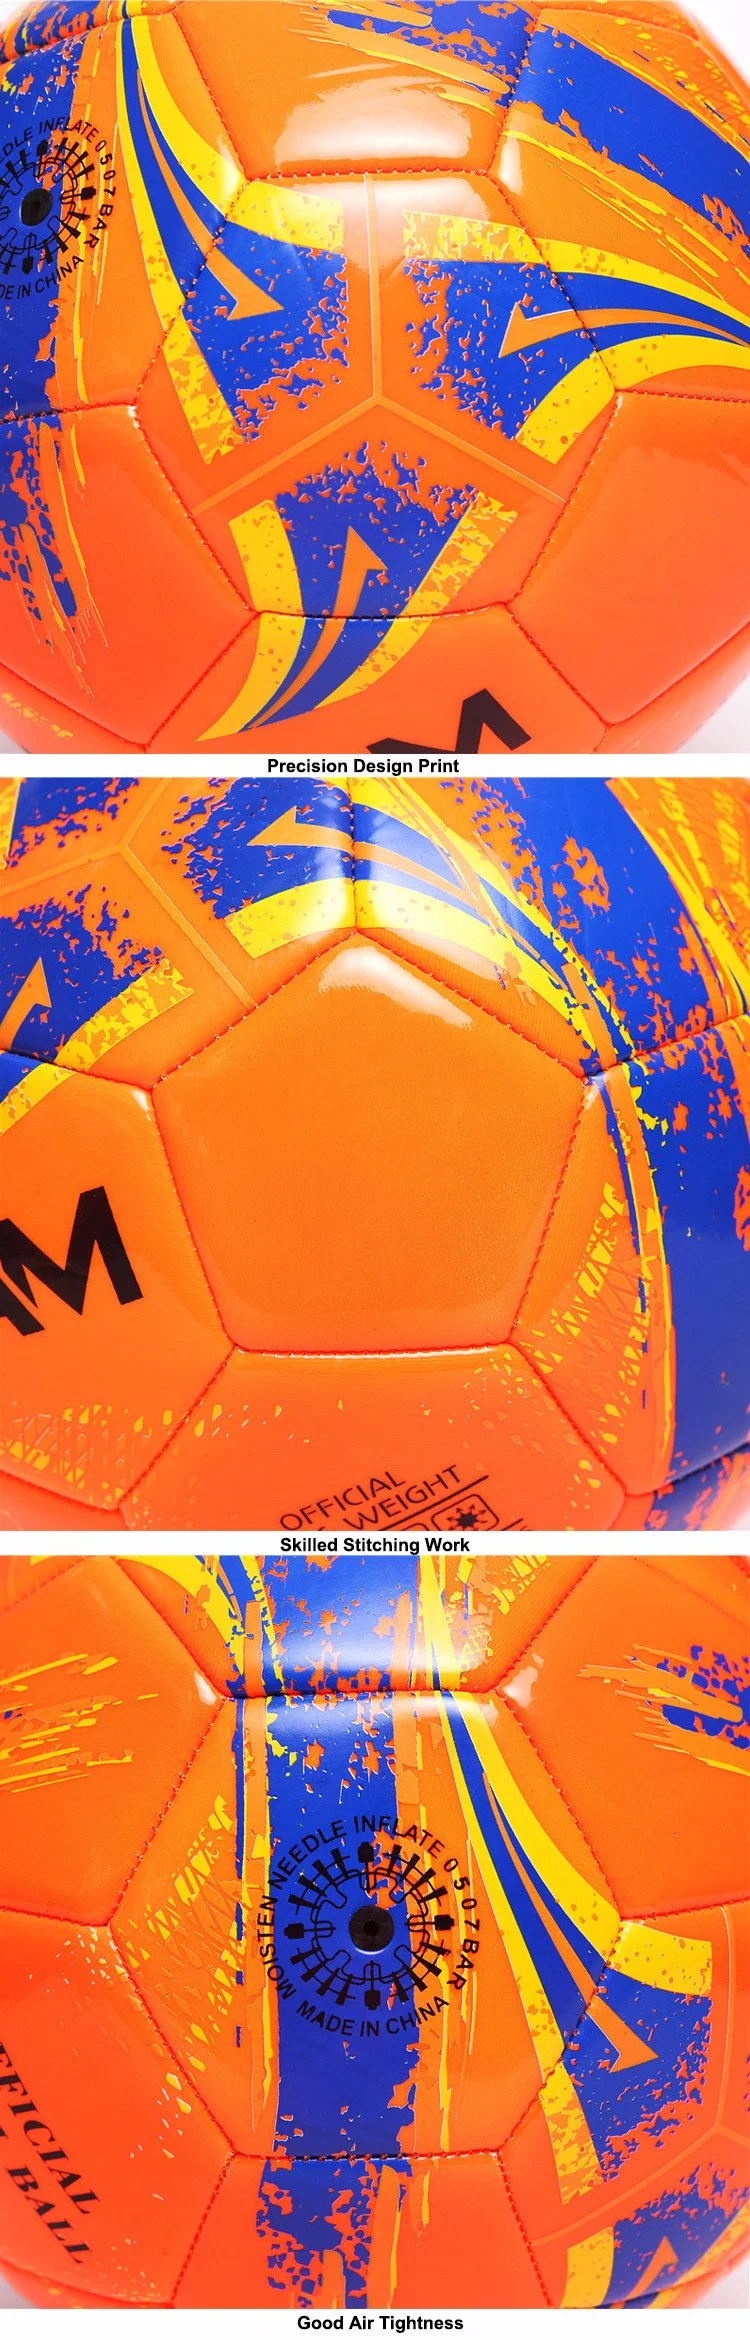 Club-Level Normal Size Five Sleeker Soccer Ball